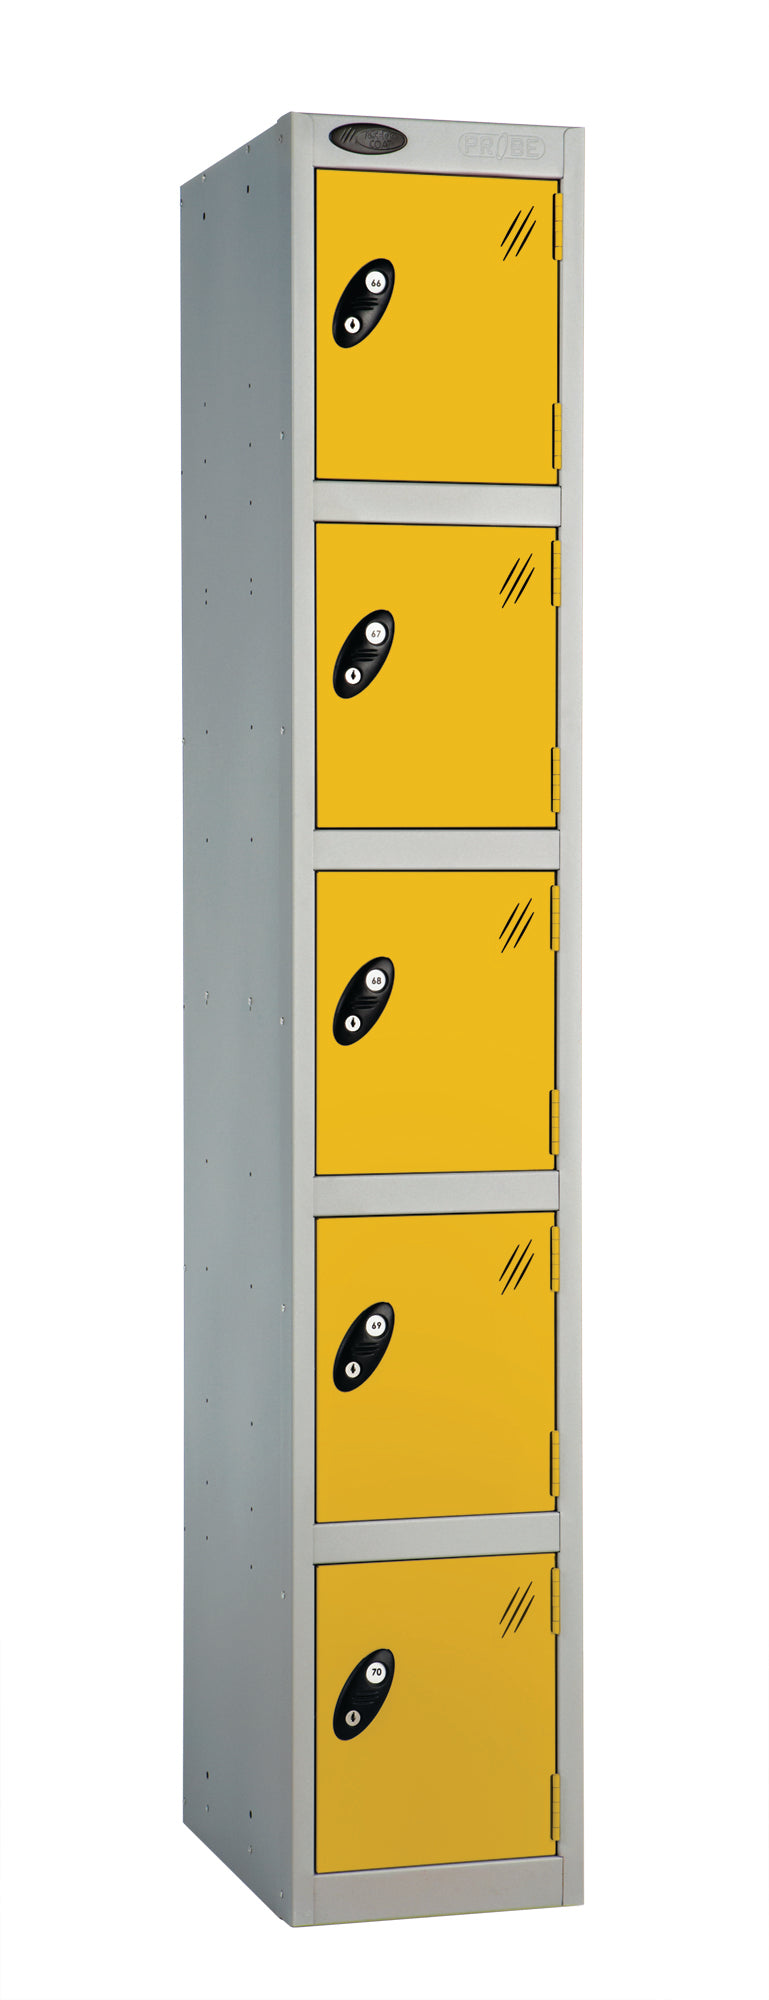 PROBEBOX STANDARD 1 NEST STEEL LOCKERS - ROYAL YELLOW 5 DOOR Storage Lockers > Lockers > Cabinets > Storage > Probe > One Stop For Safety   